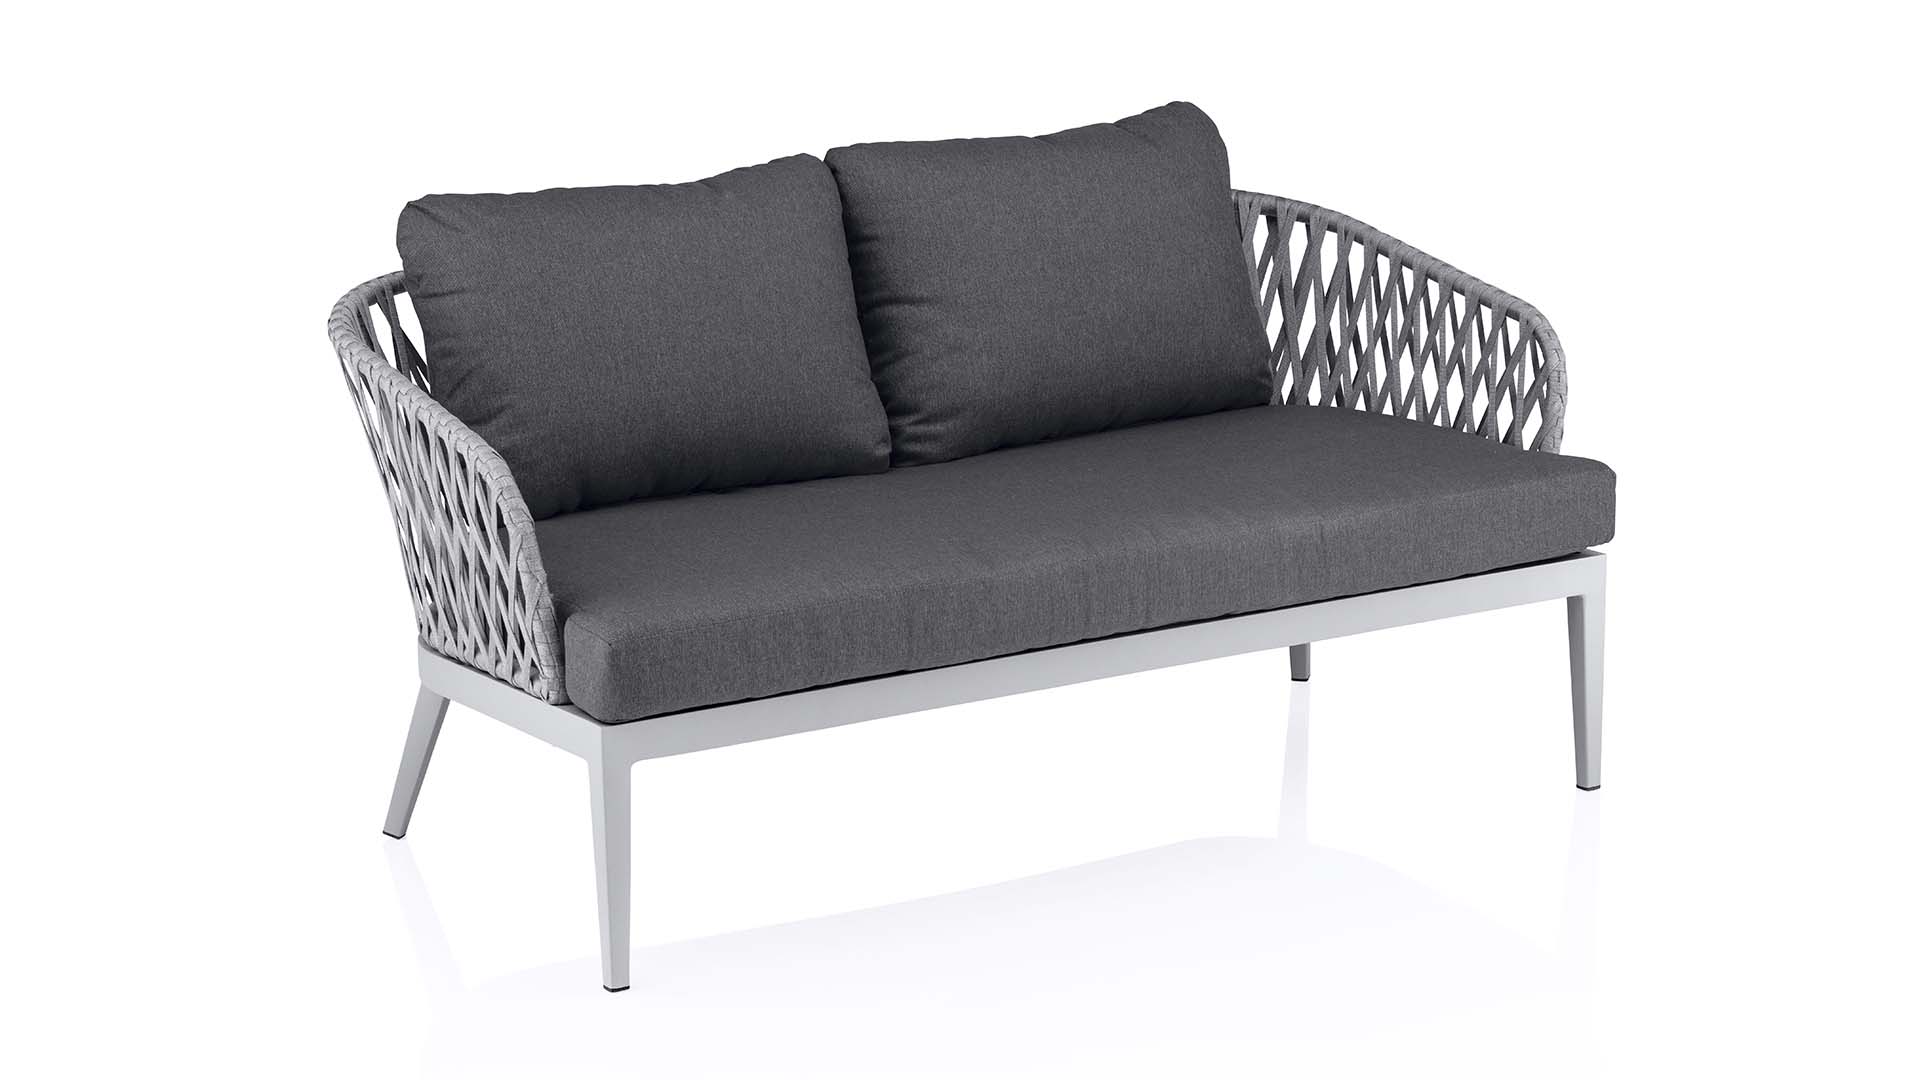 KETTLER SUNNY Lounge 2er Sofa per Mausklick | Exclusive Gartenmöbel